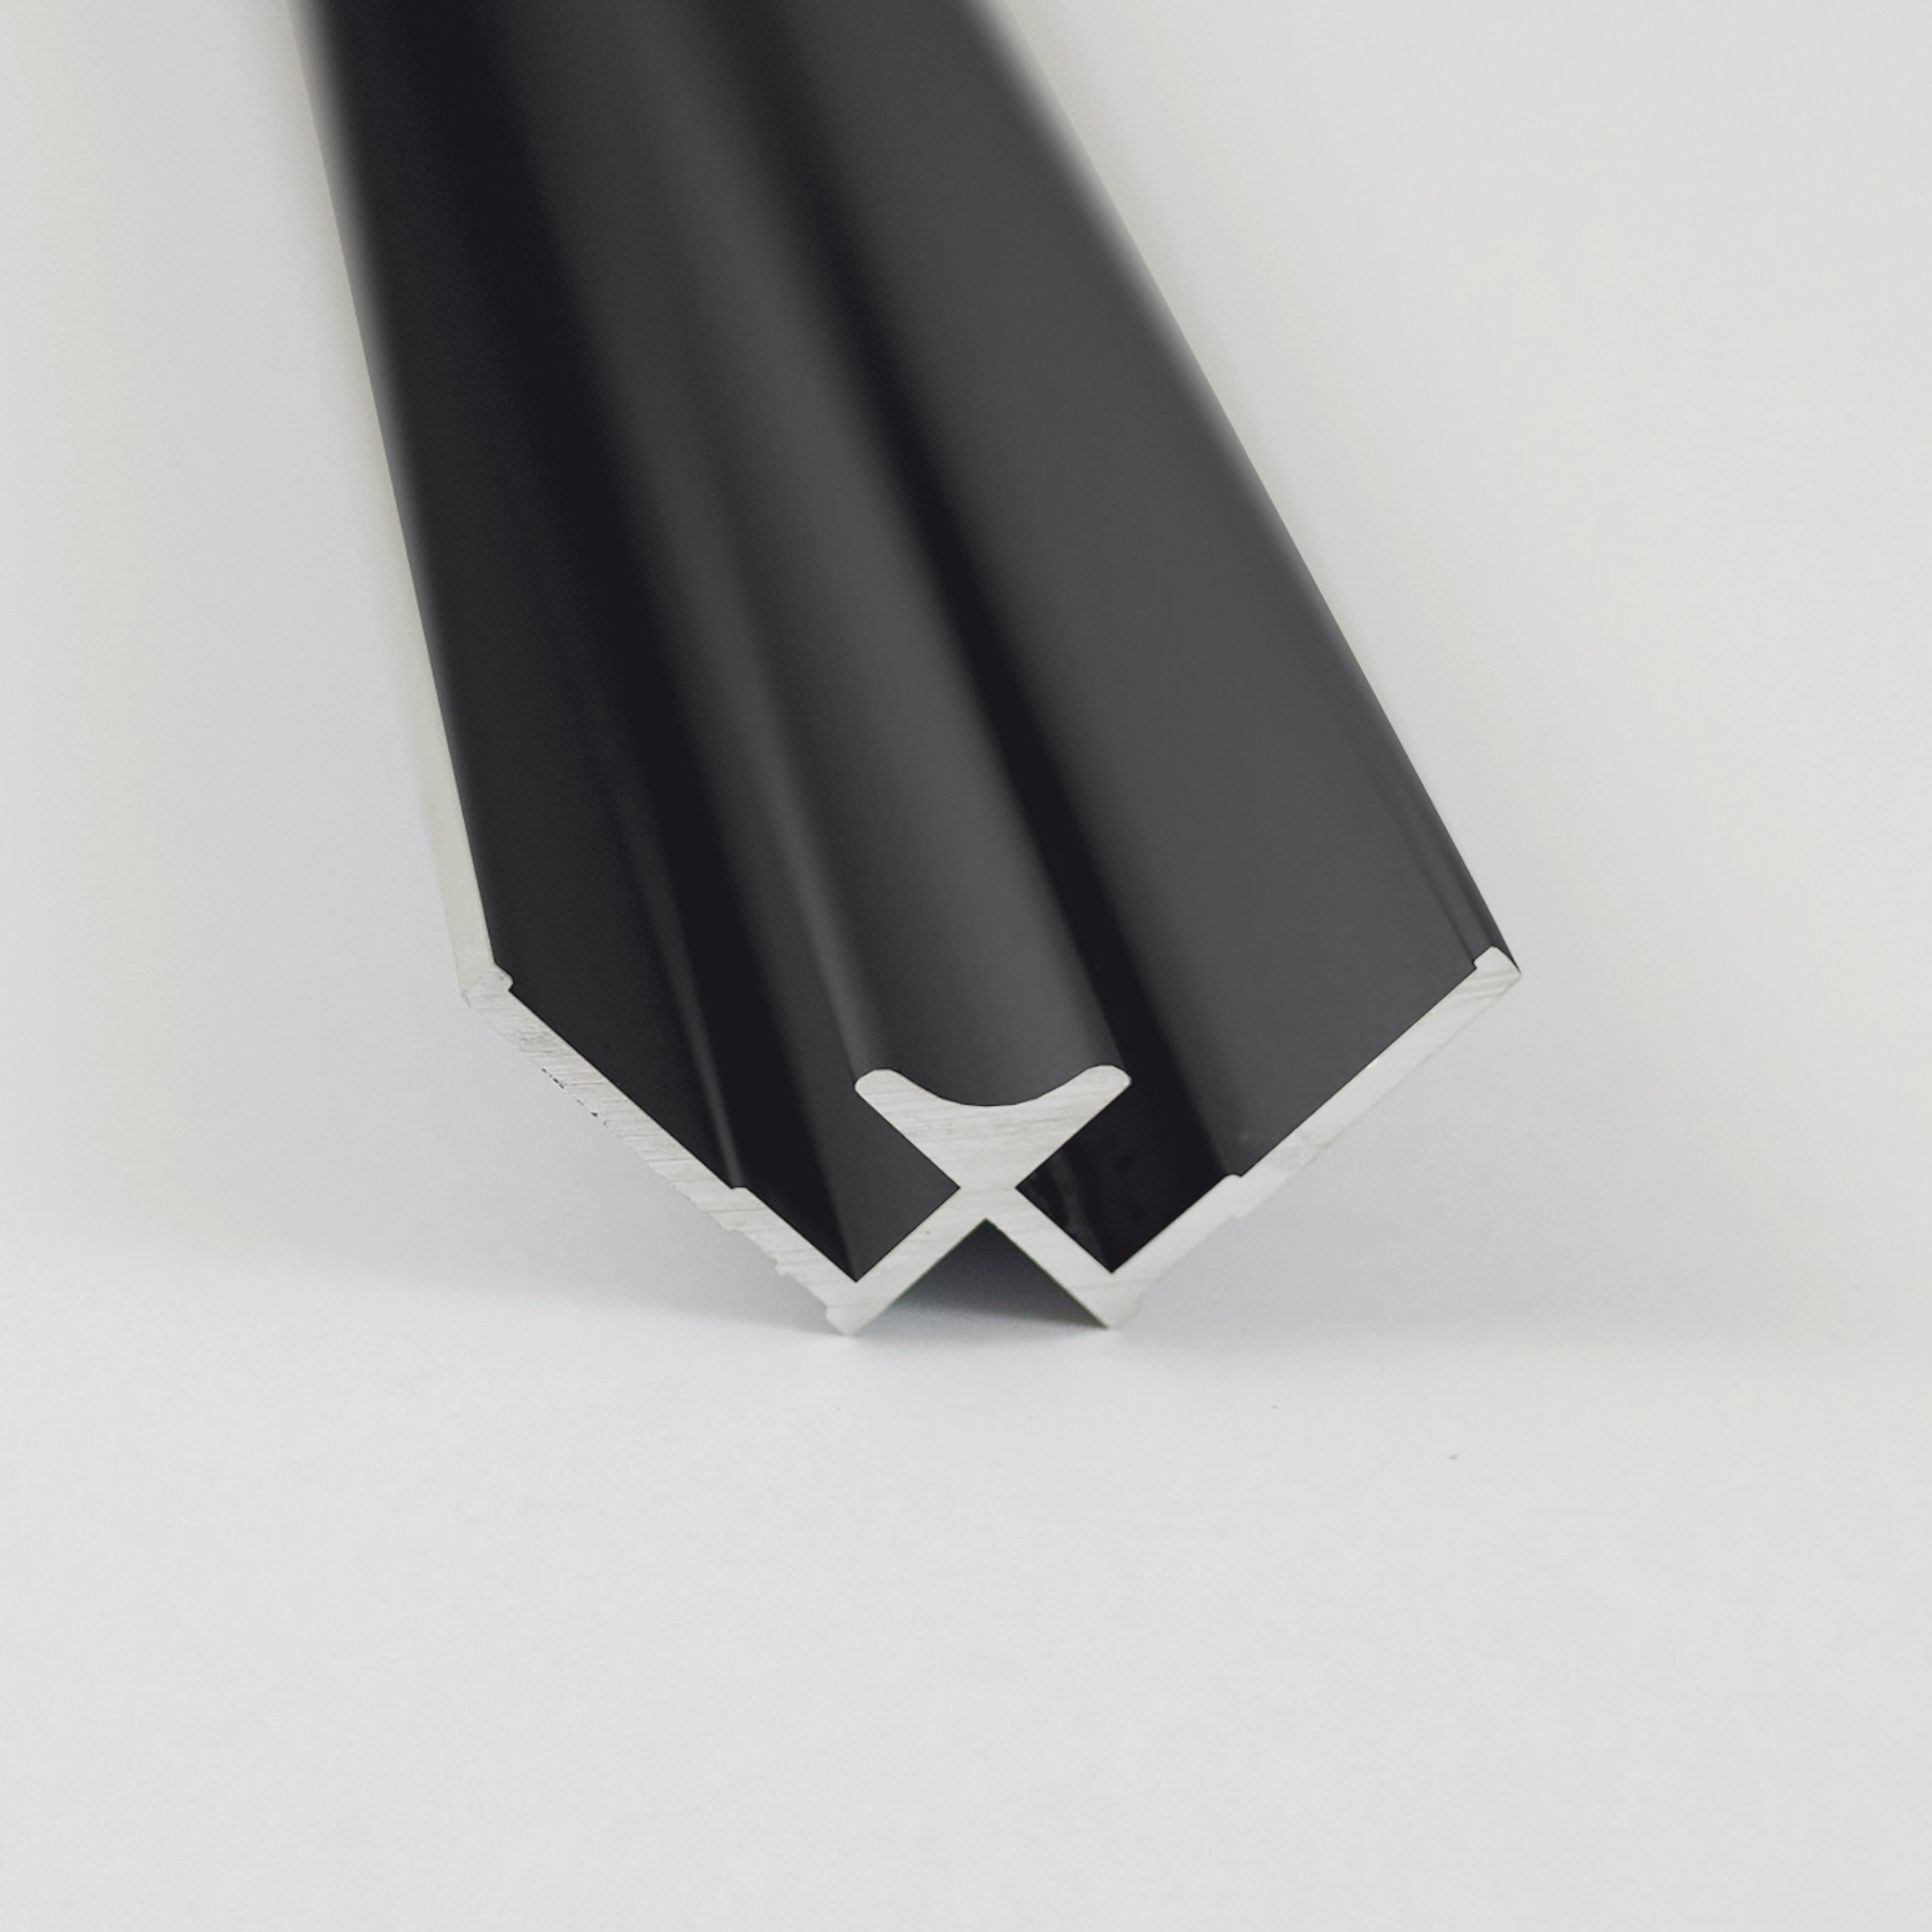 Verbindungsprofil für Rückwandplatten, Ecke innen, schwarz matt, 2550 mm + product picture